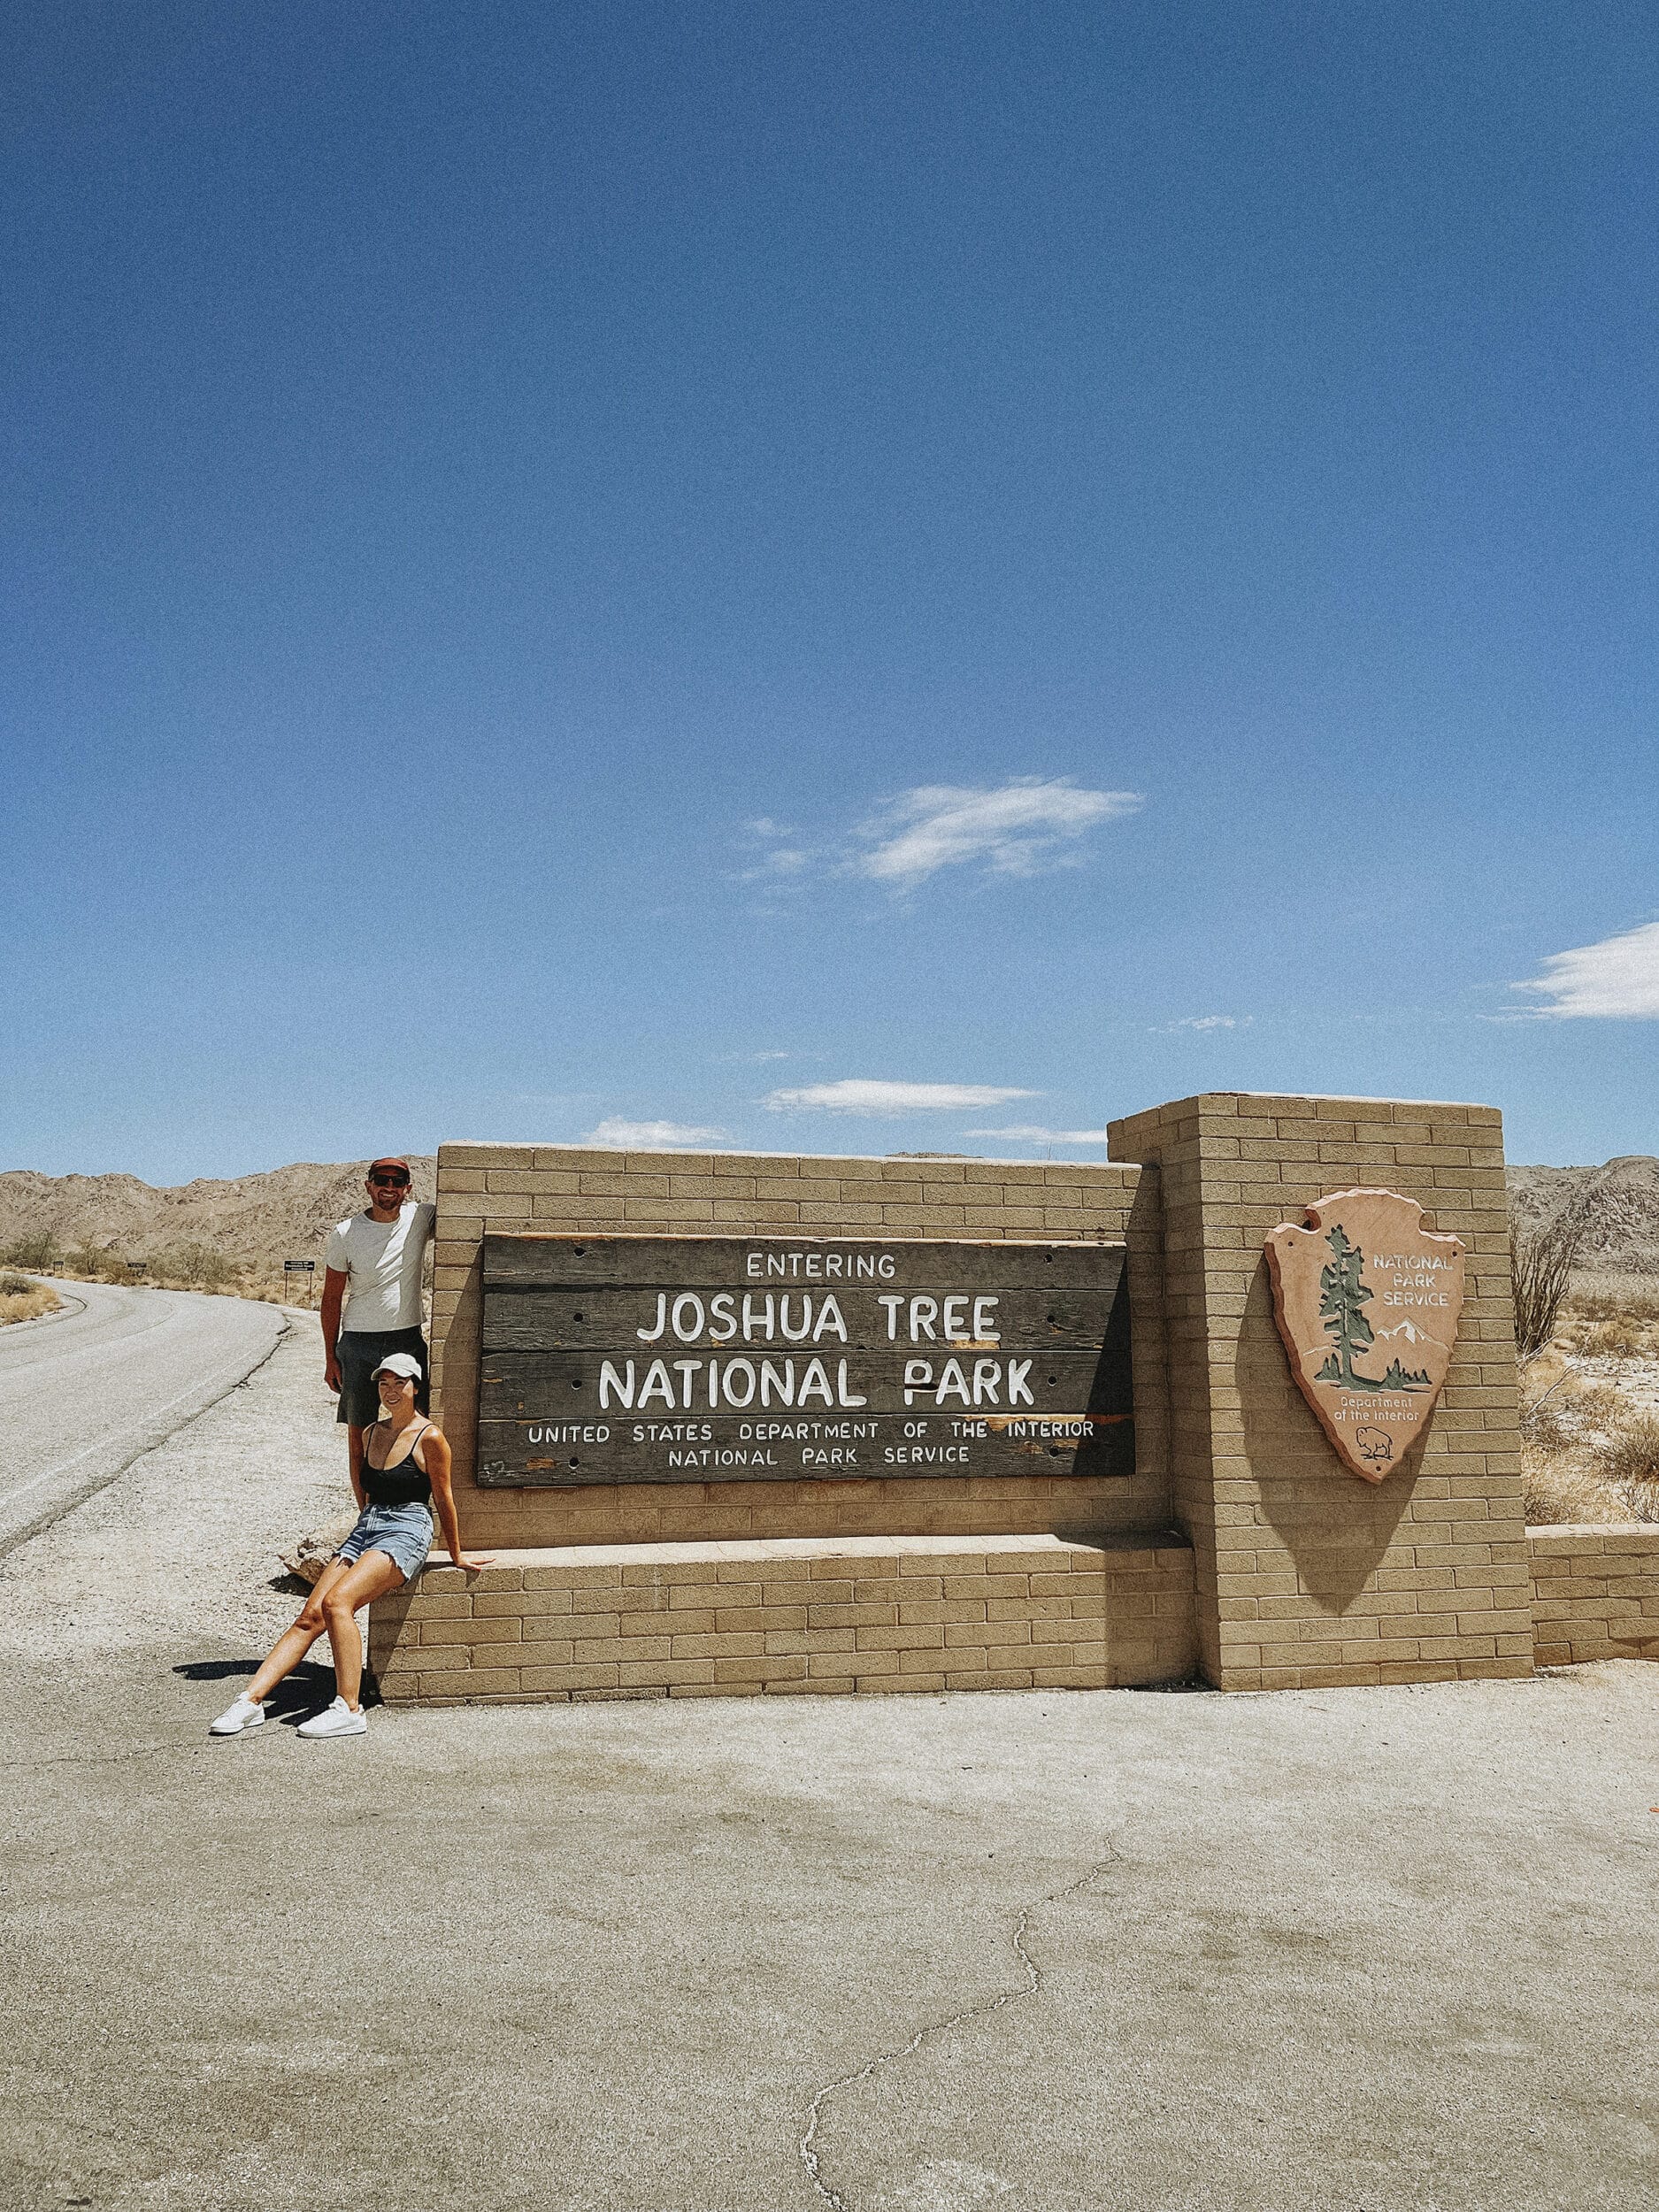 Next to the National Park sign for Joshua Tree! | via Yellow Brick Home